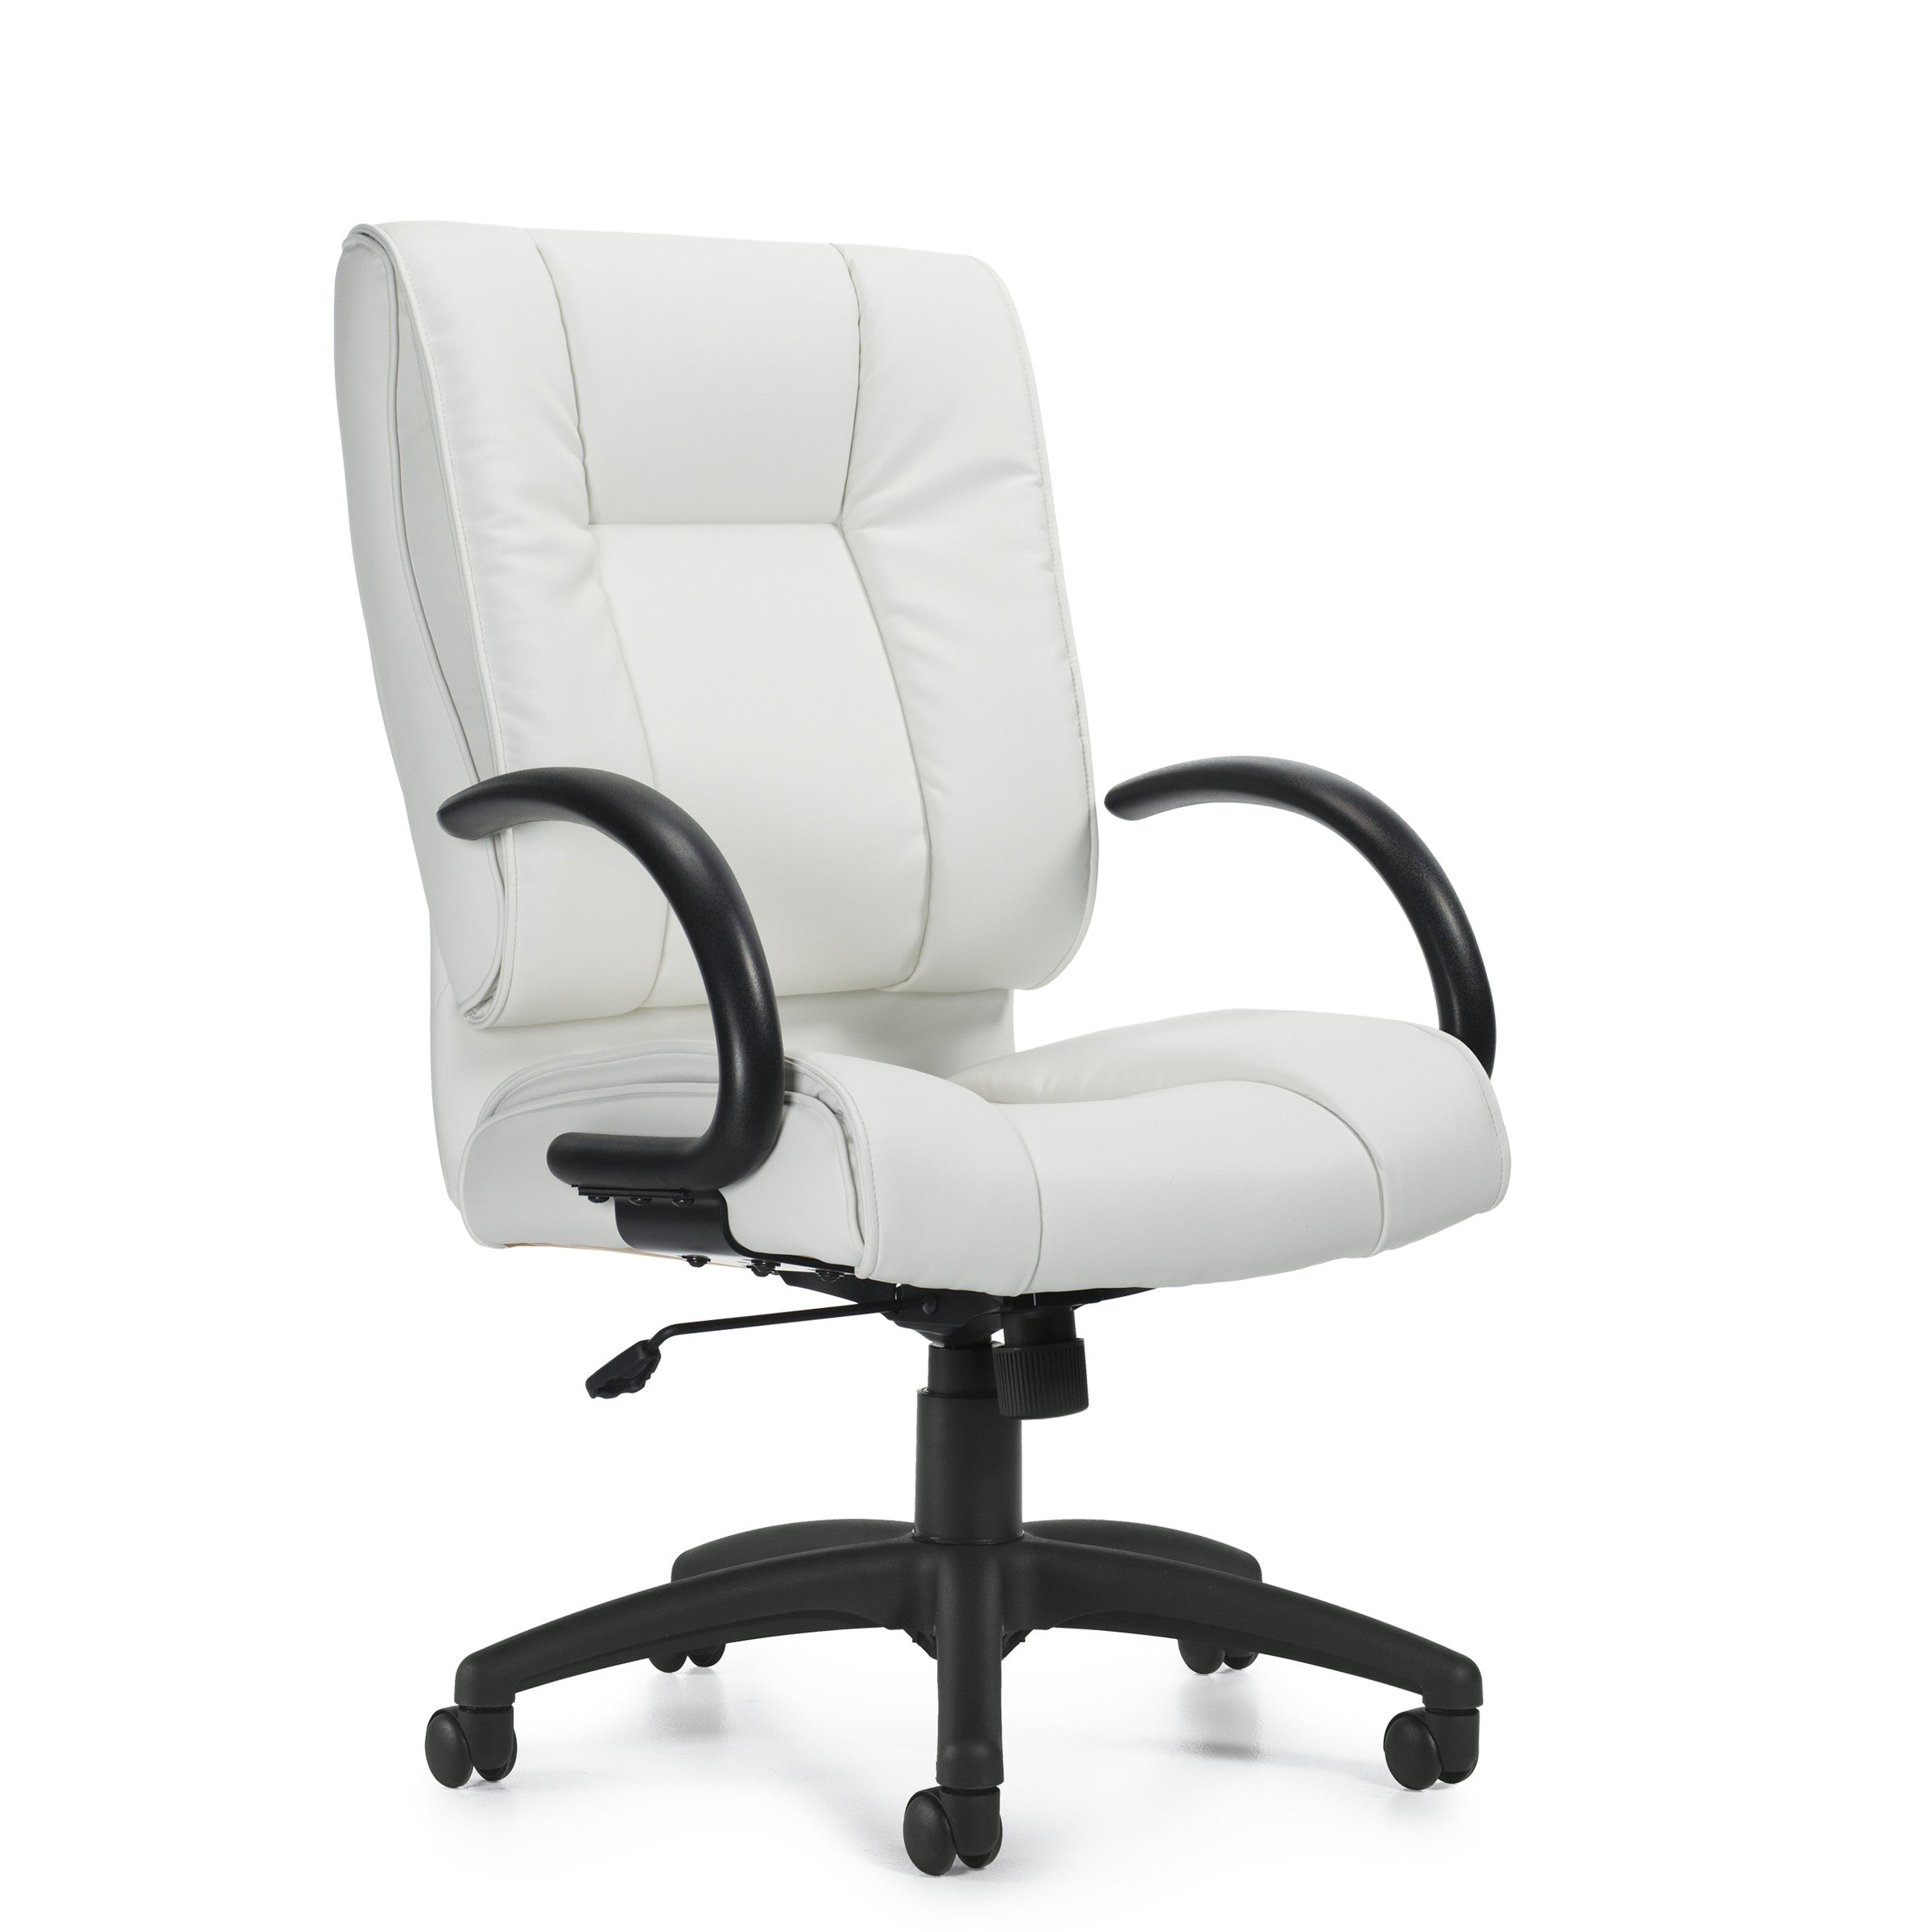 Customized Luxhide Management Tilter Chair G2700-1 - Kainosbuy.com